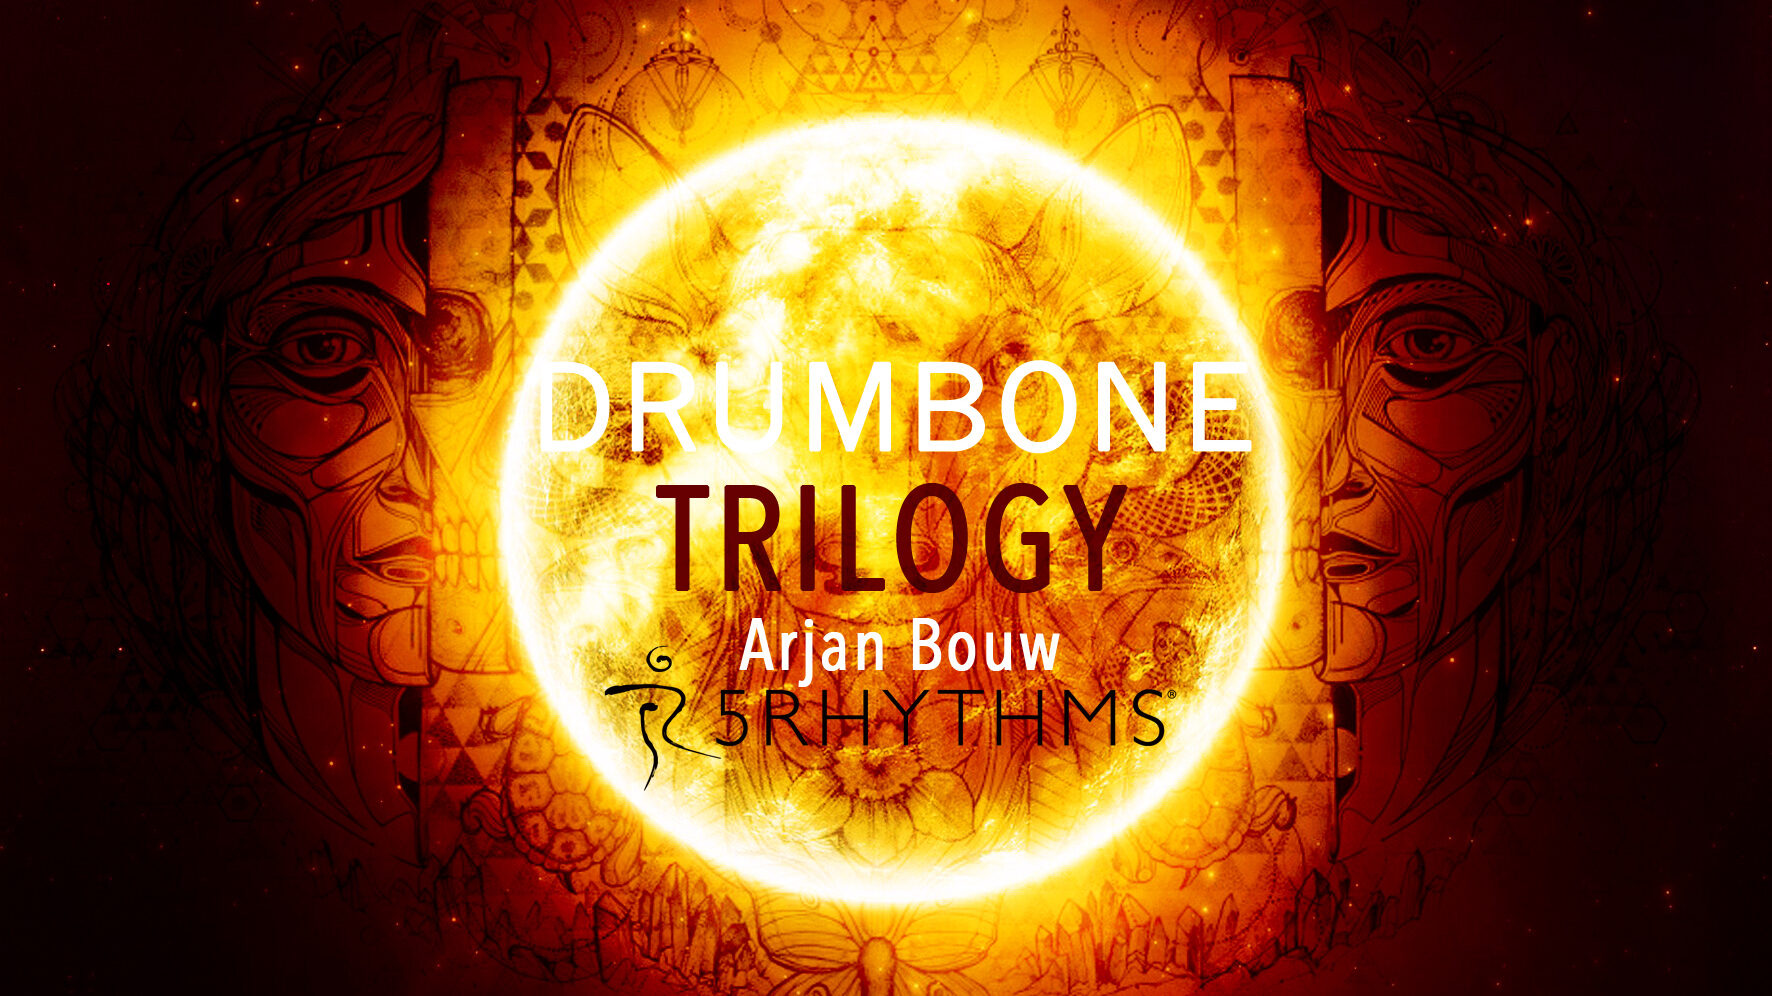 Arjan Bouw 5Rhythms drumbone